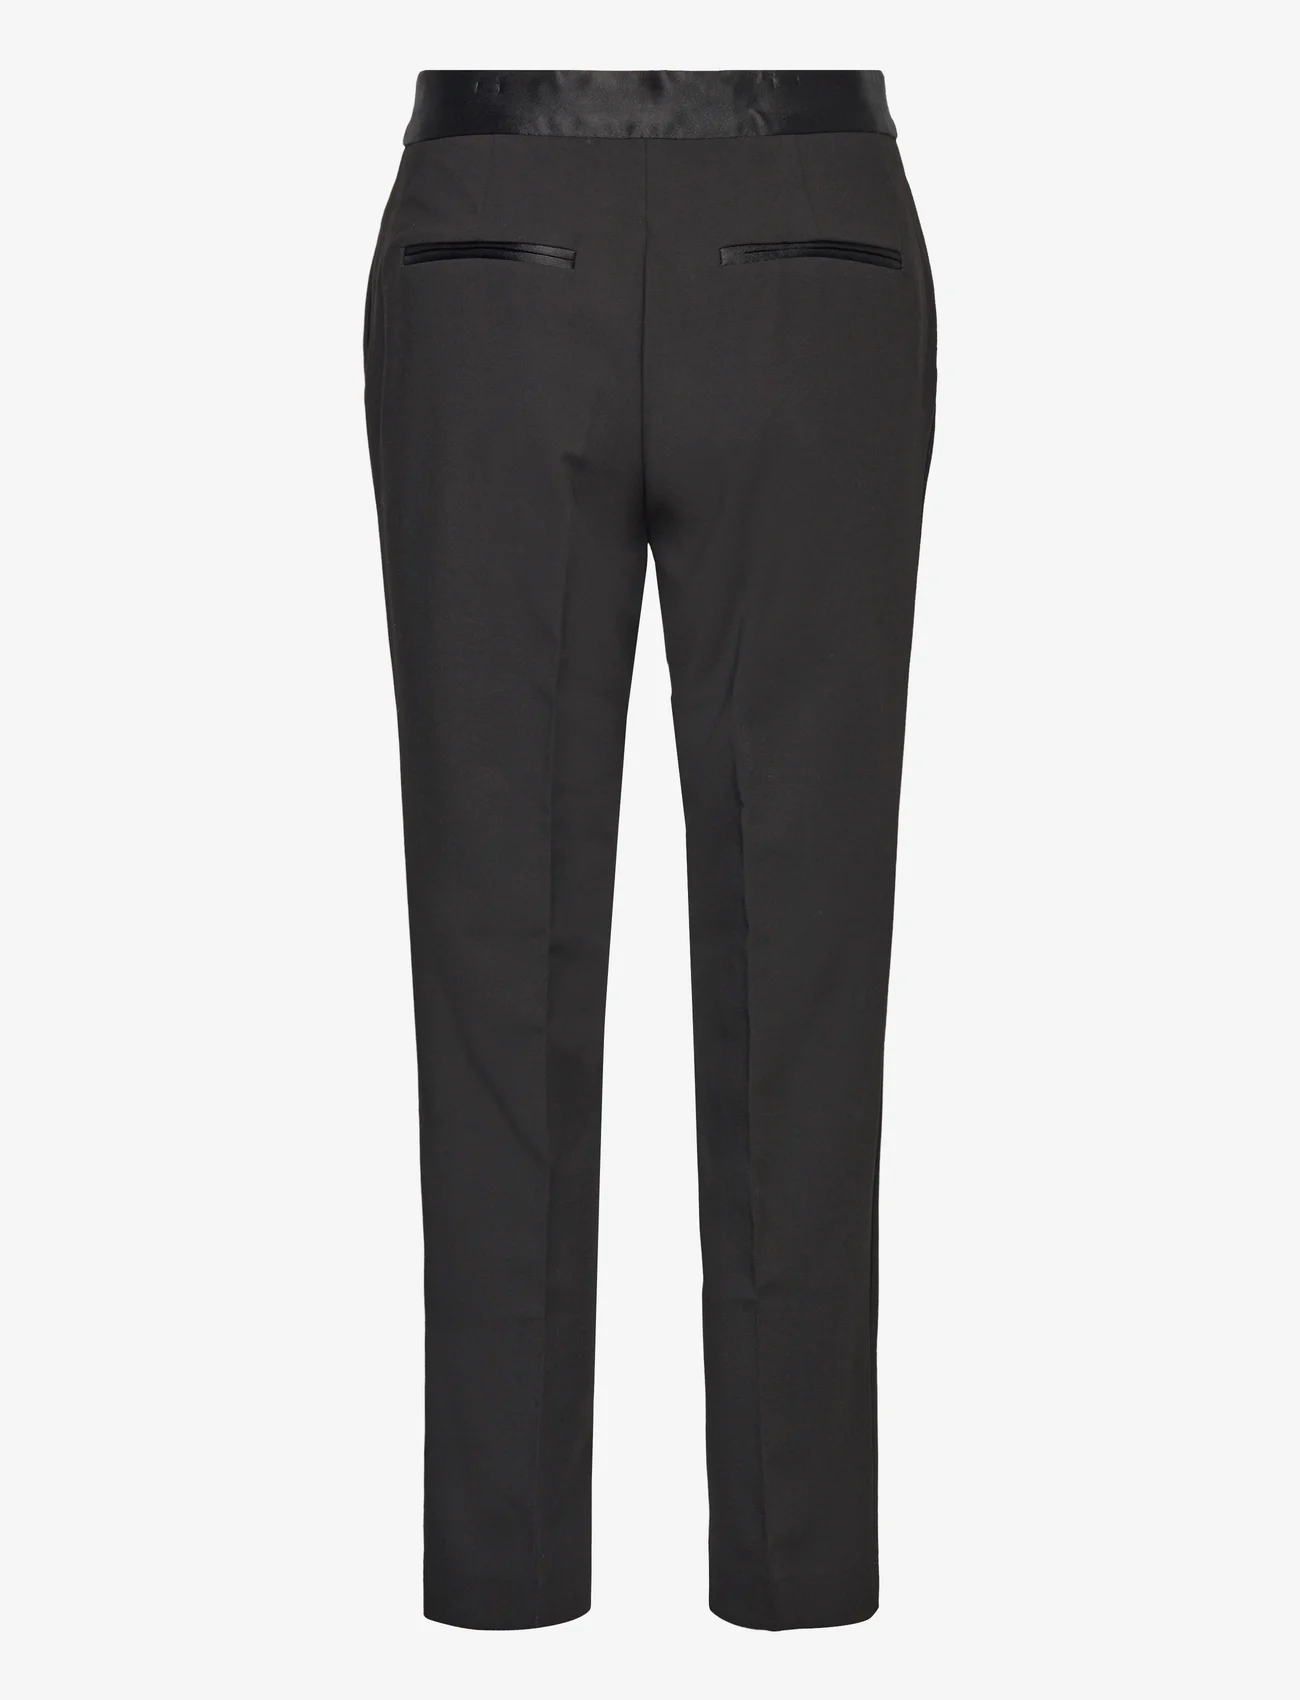 IVY OAK - ANKLE LENGTH PANTS - slim fit trousers - black - 1